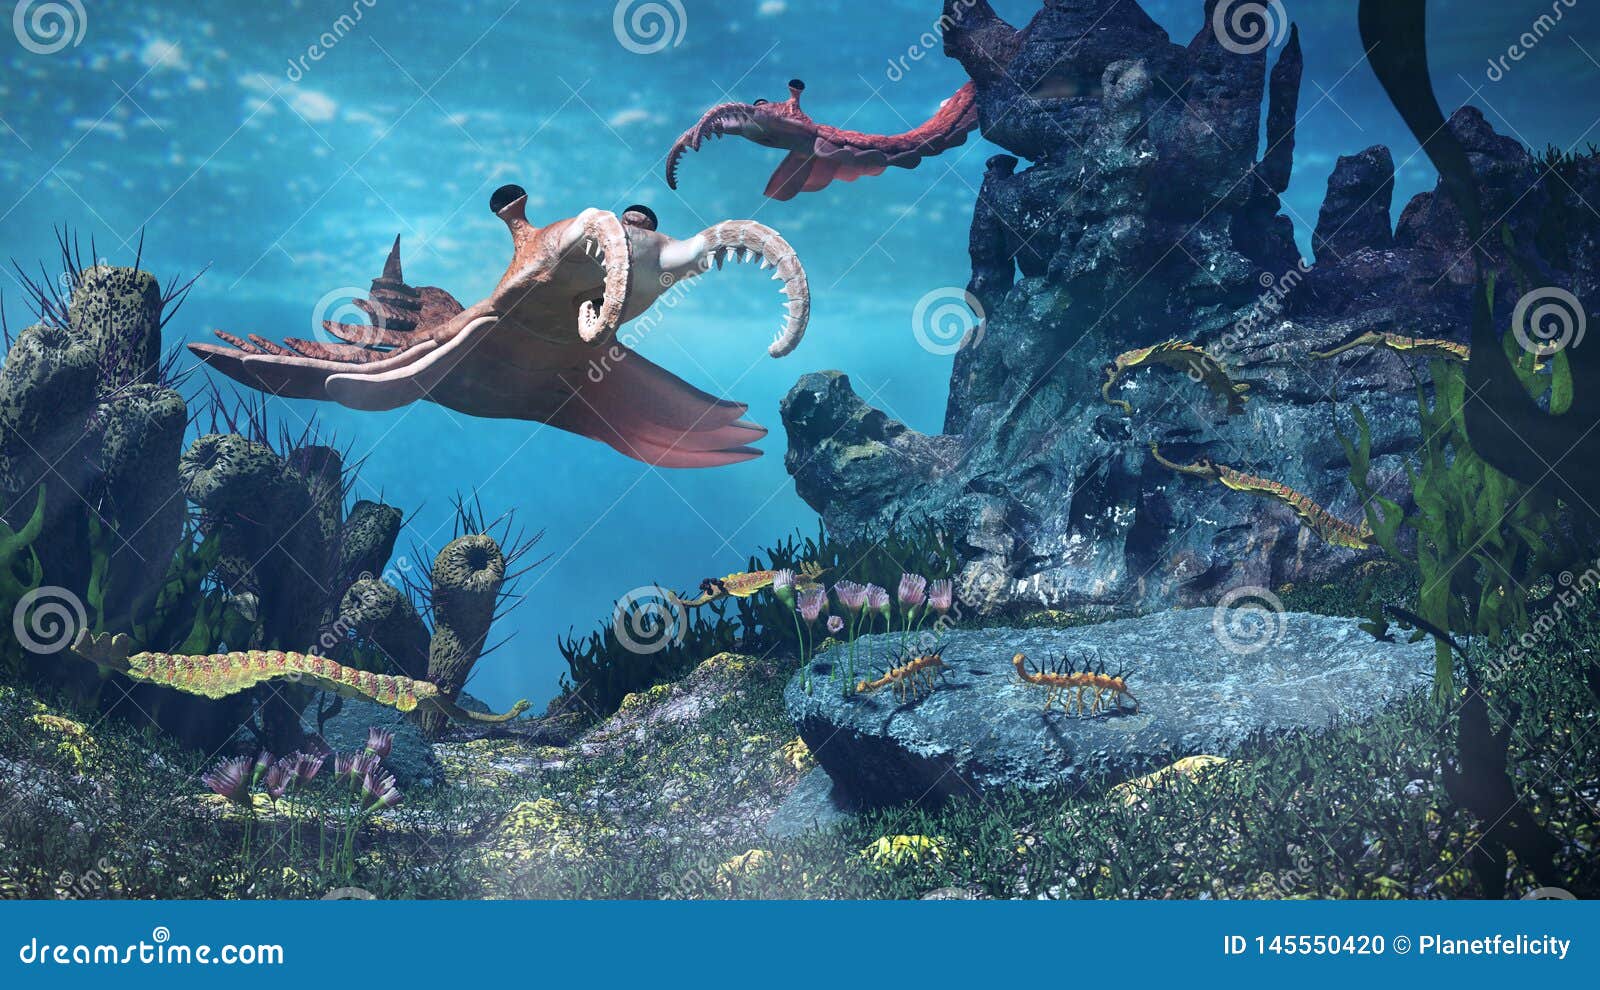 creatures of the cambrian period, underwater scene with anomalocaris, opabinia, hallucigenia, pirania and dinomischus 3d science